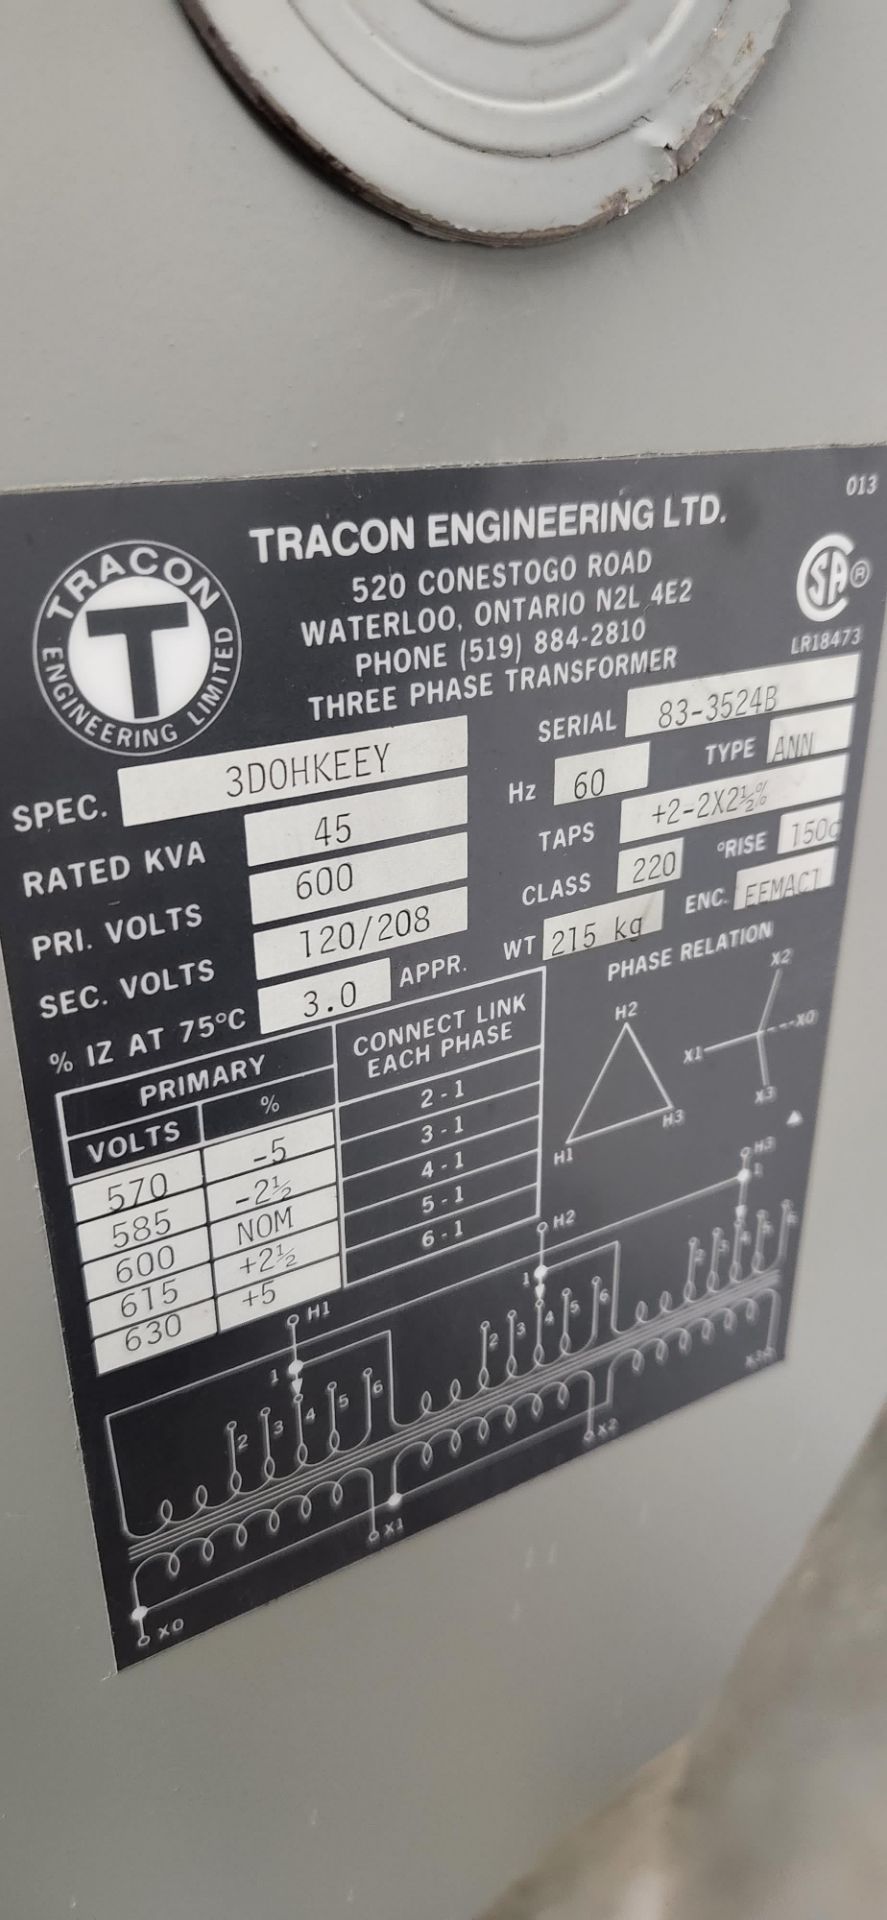 TRACON ENGR 600-220 TRANSFORMER - Image 2 of 2